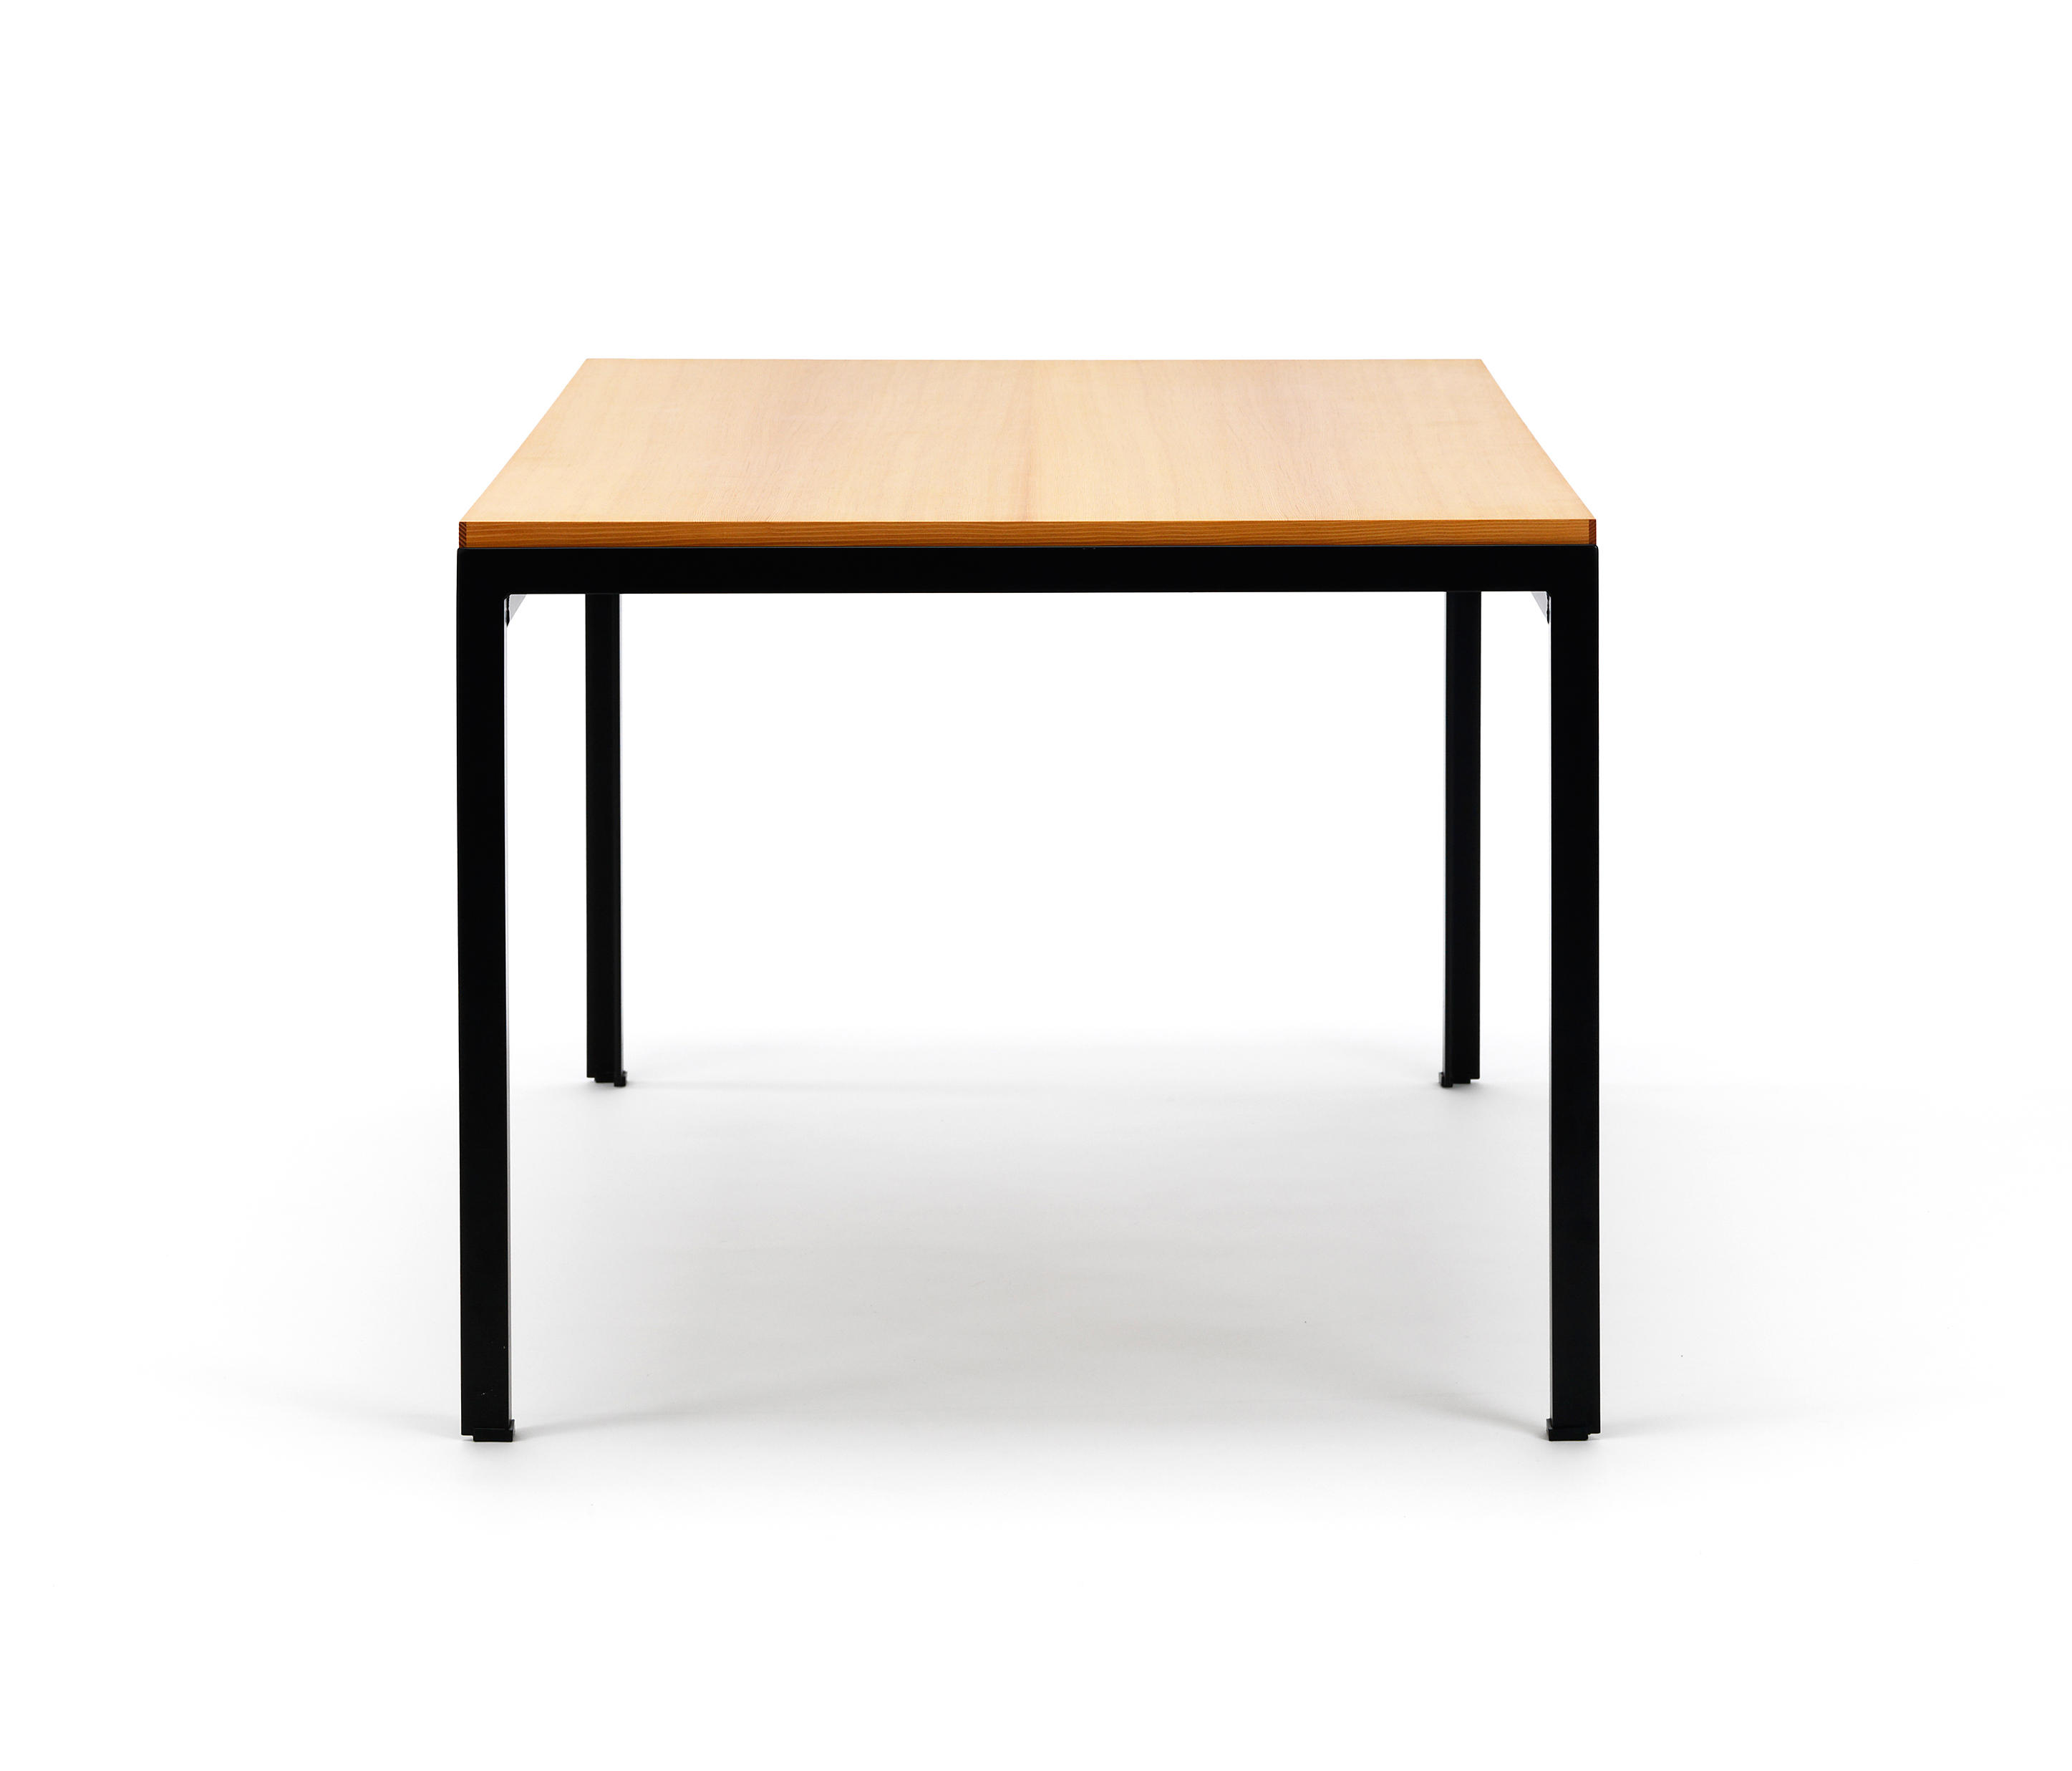 WRITING DESK - Classroom desks from Carl Hansen & Søn | Architonic